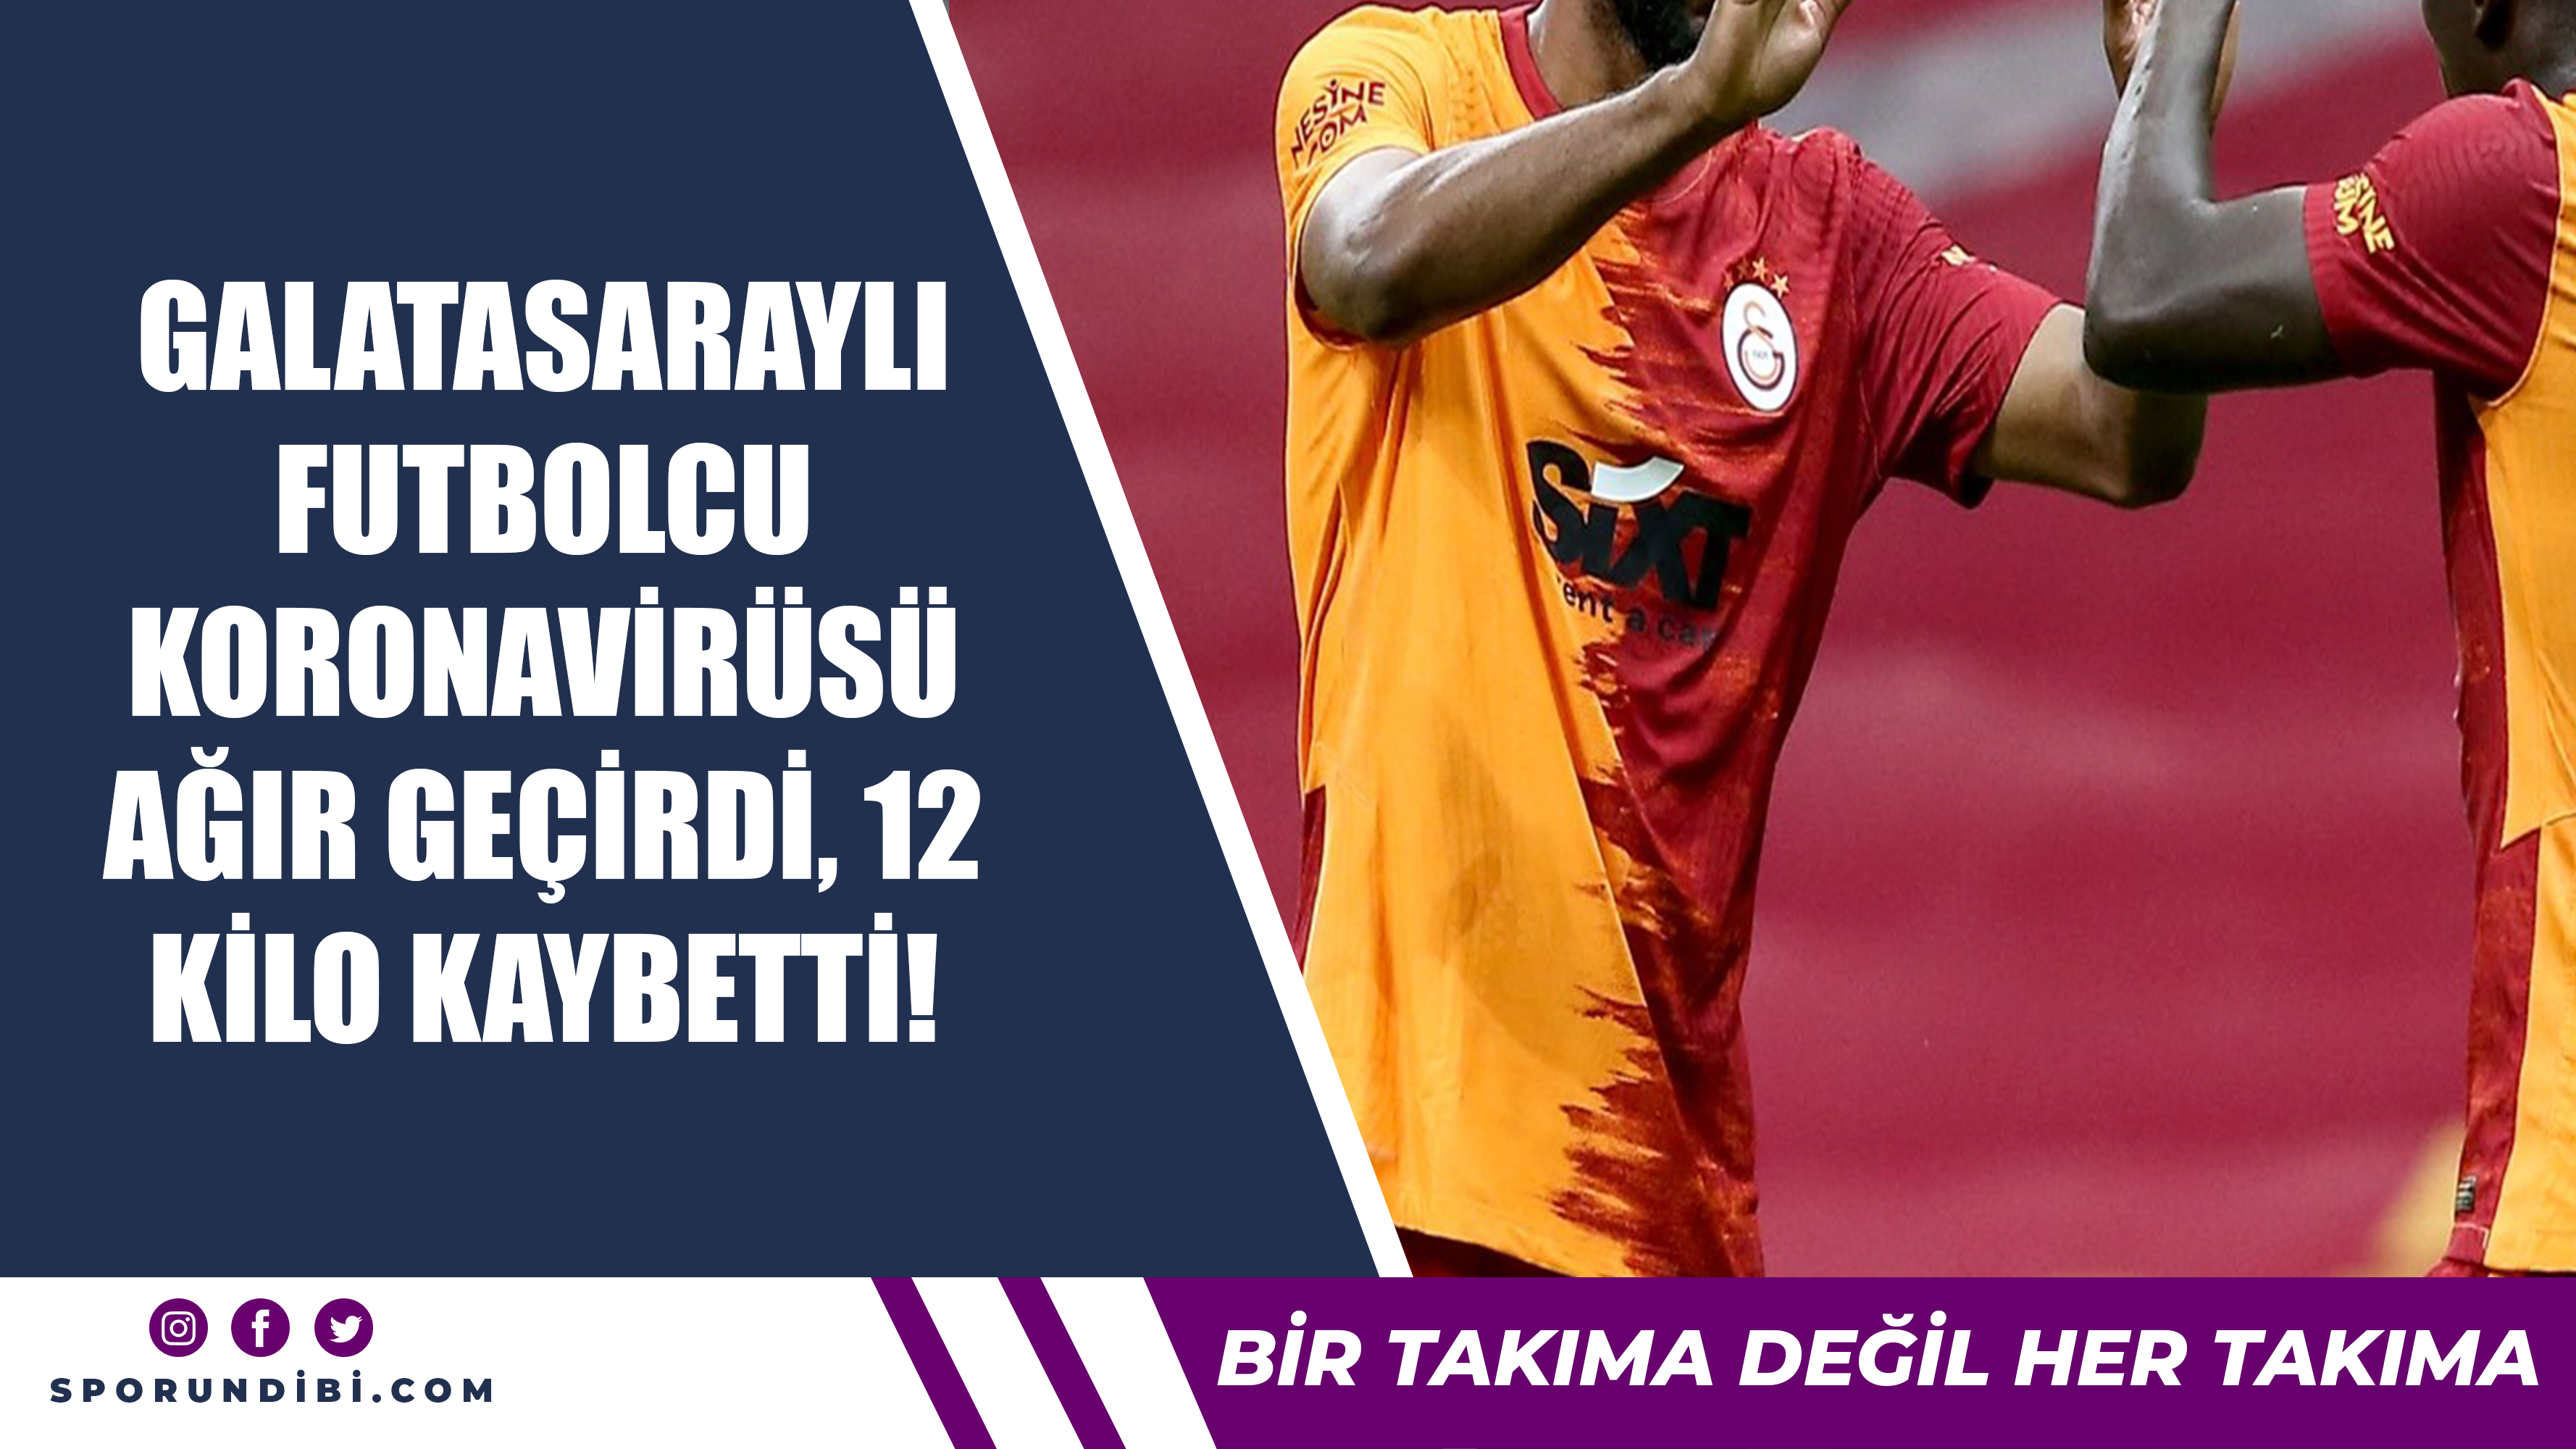 Galatasaraylı futbolcu koronavirüsü ağır geçirdi, 12 kilo kaybetti!